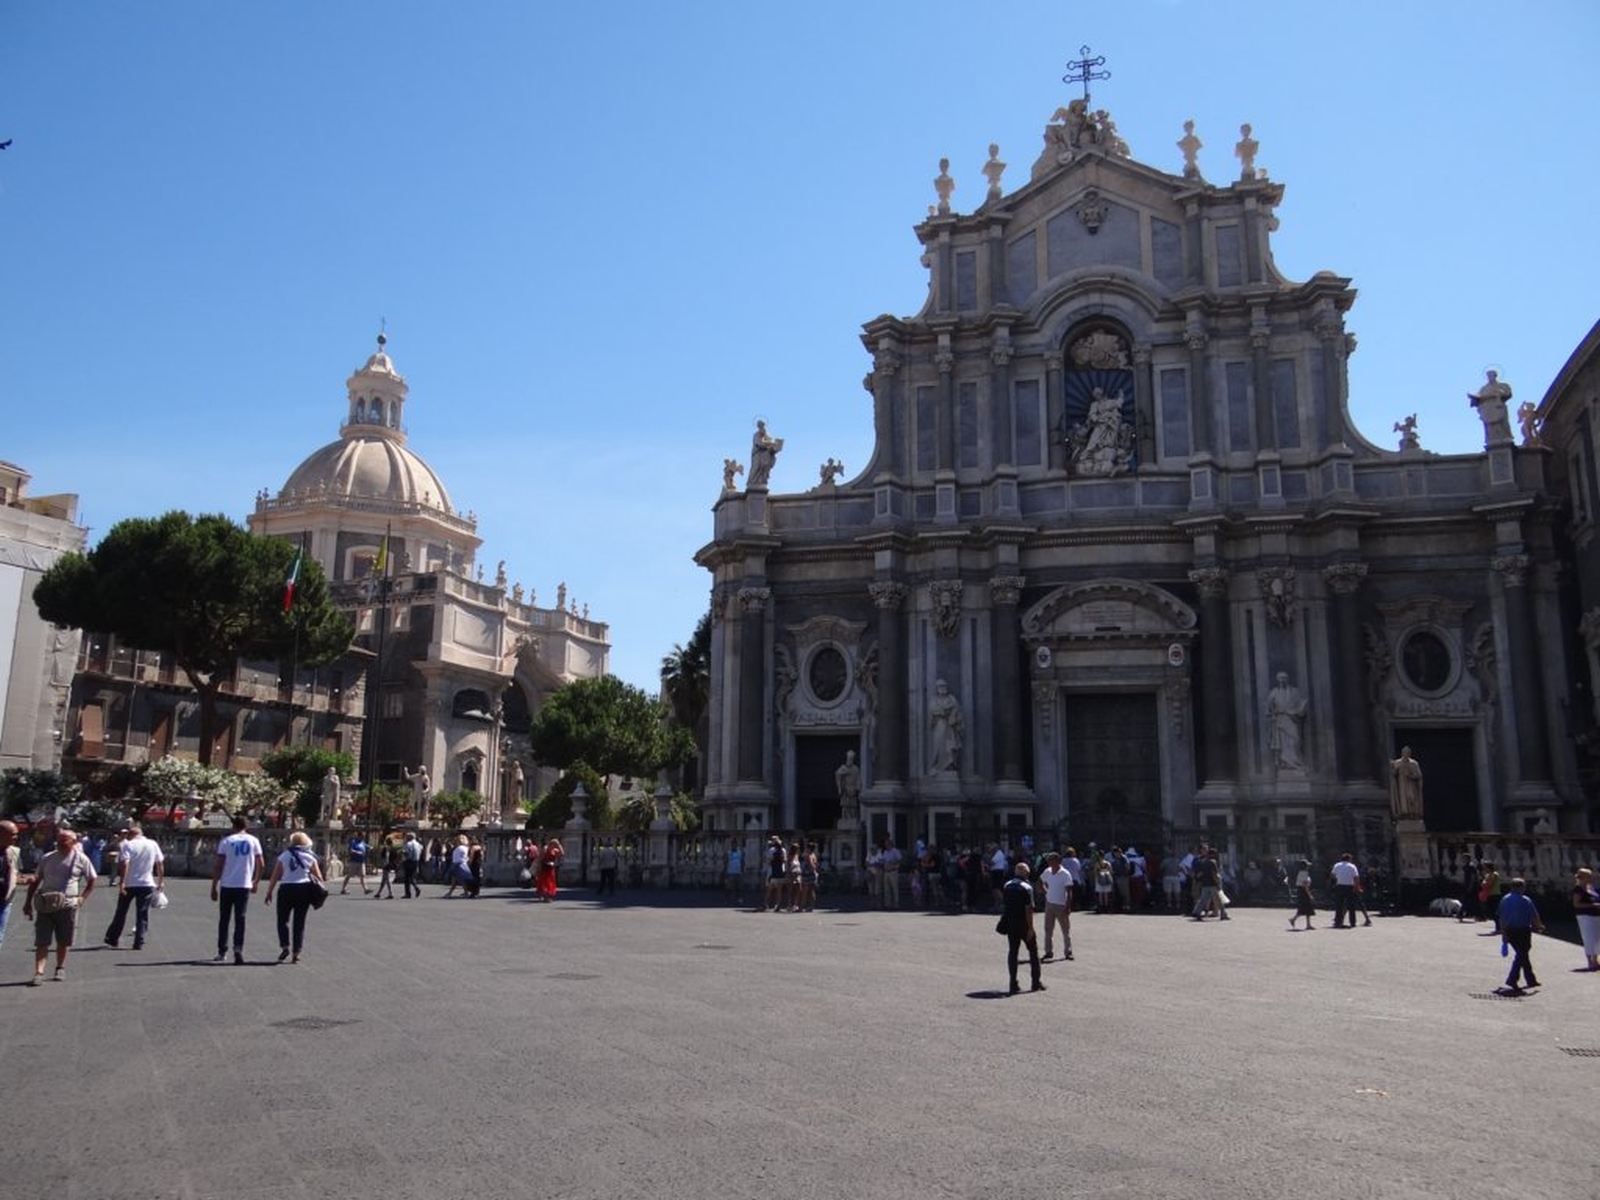 003 - Catania - Cattedrale di Sant'Agata